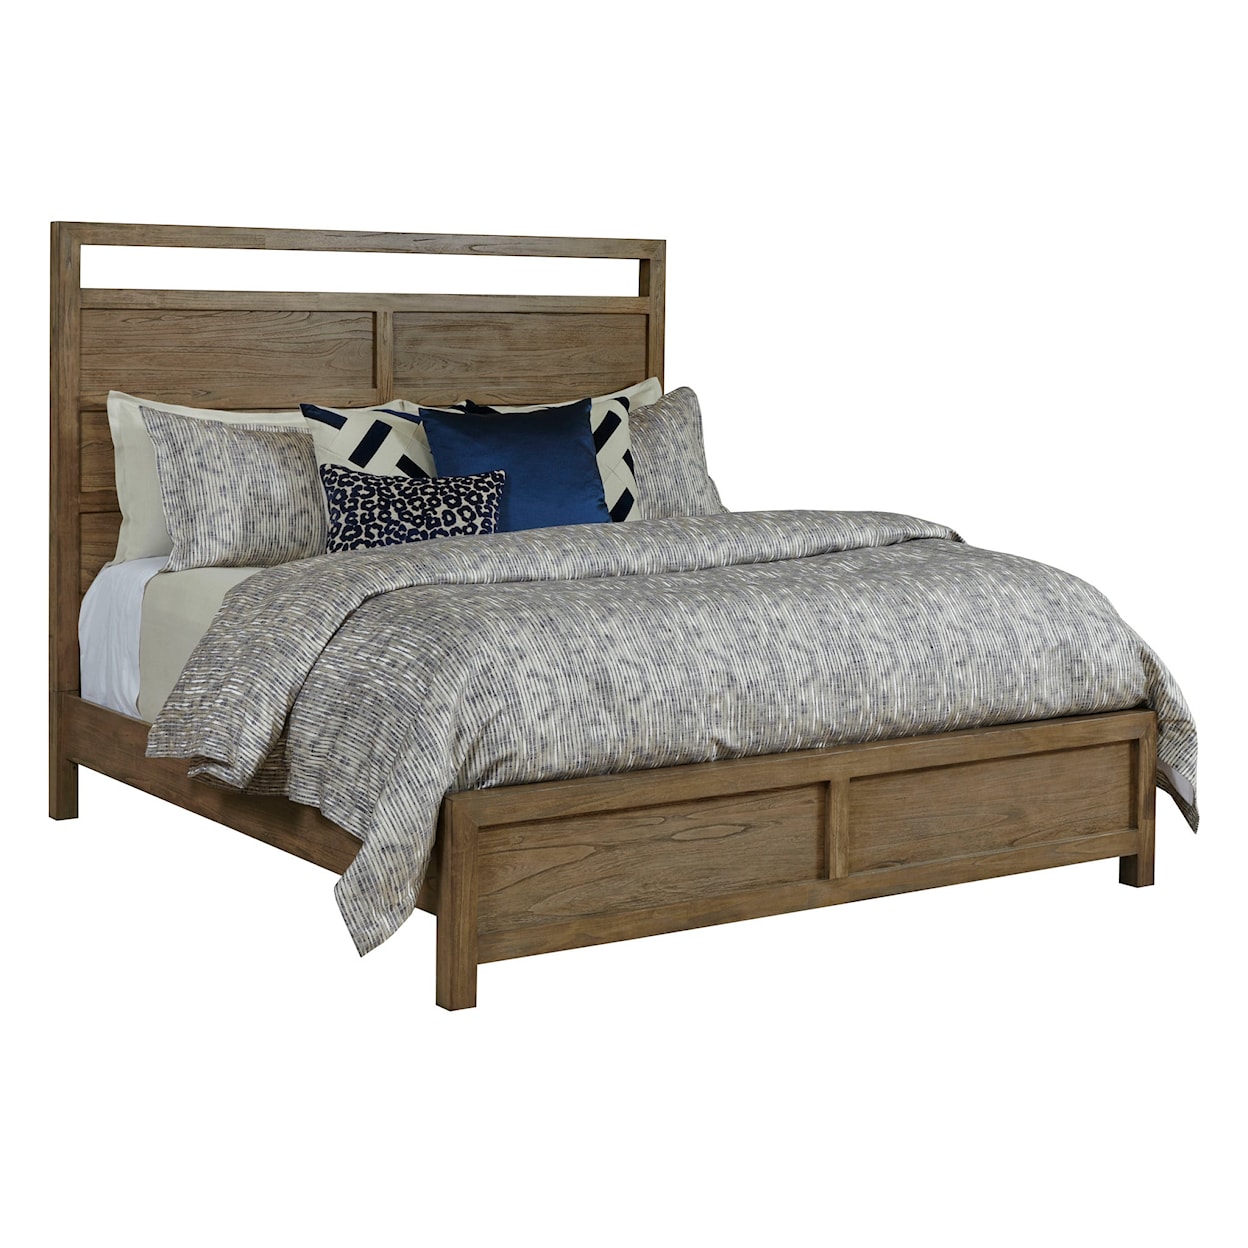 Kincaid Furniture Debut Wyatt King Panel Bed